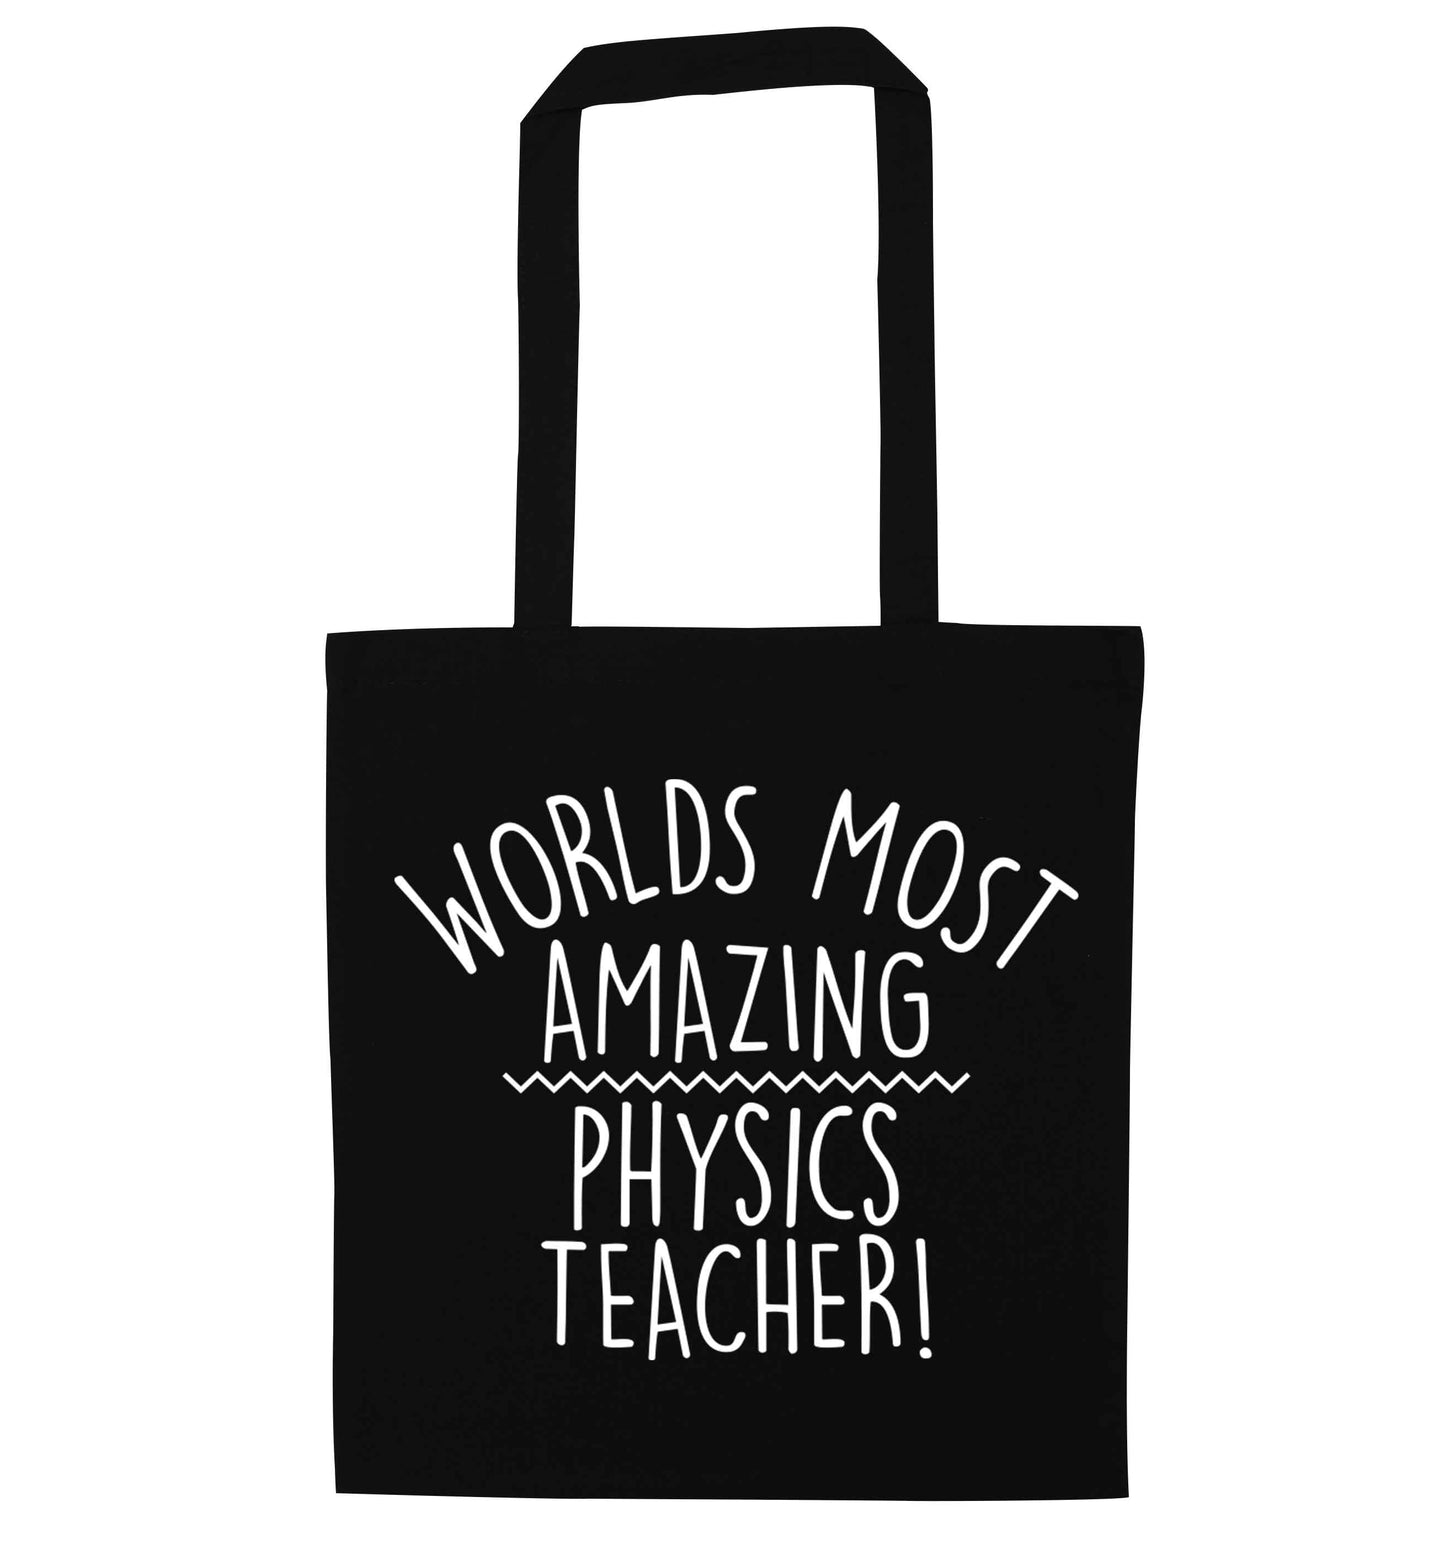 Worlds most amazing physics teacher black tote bag